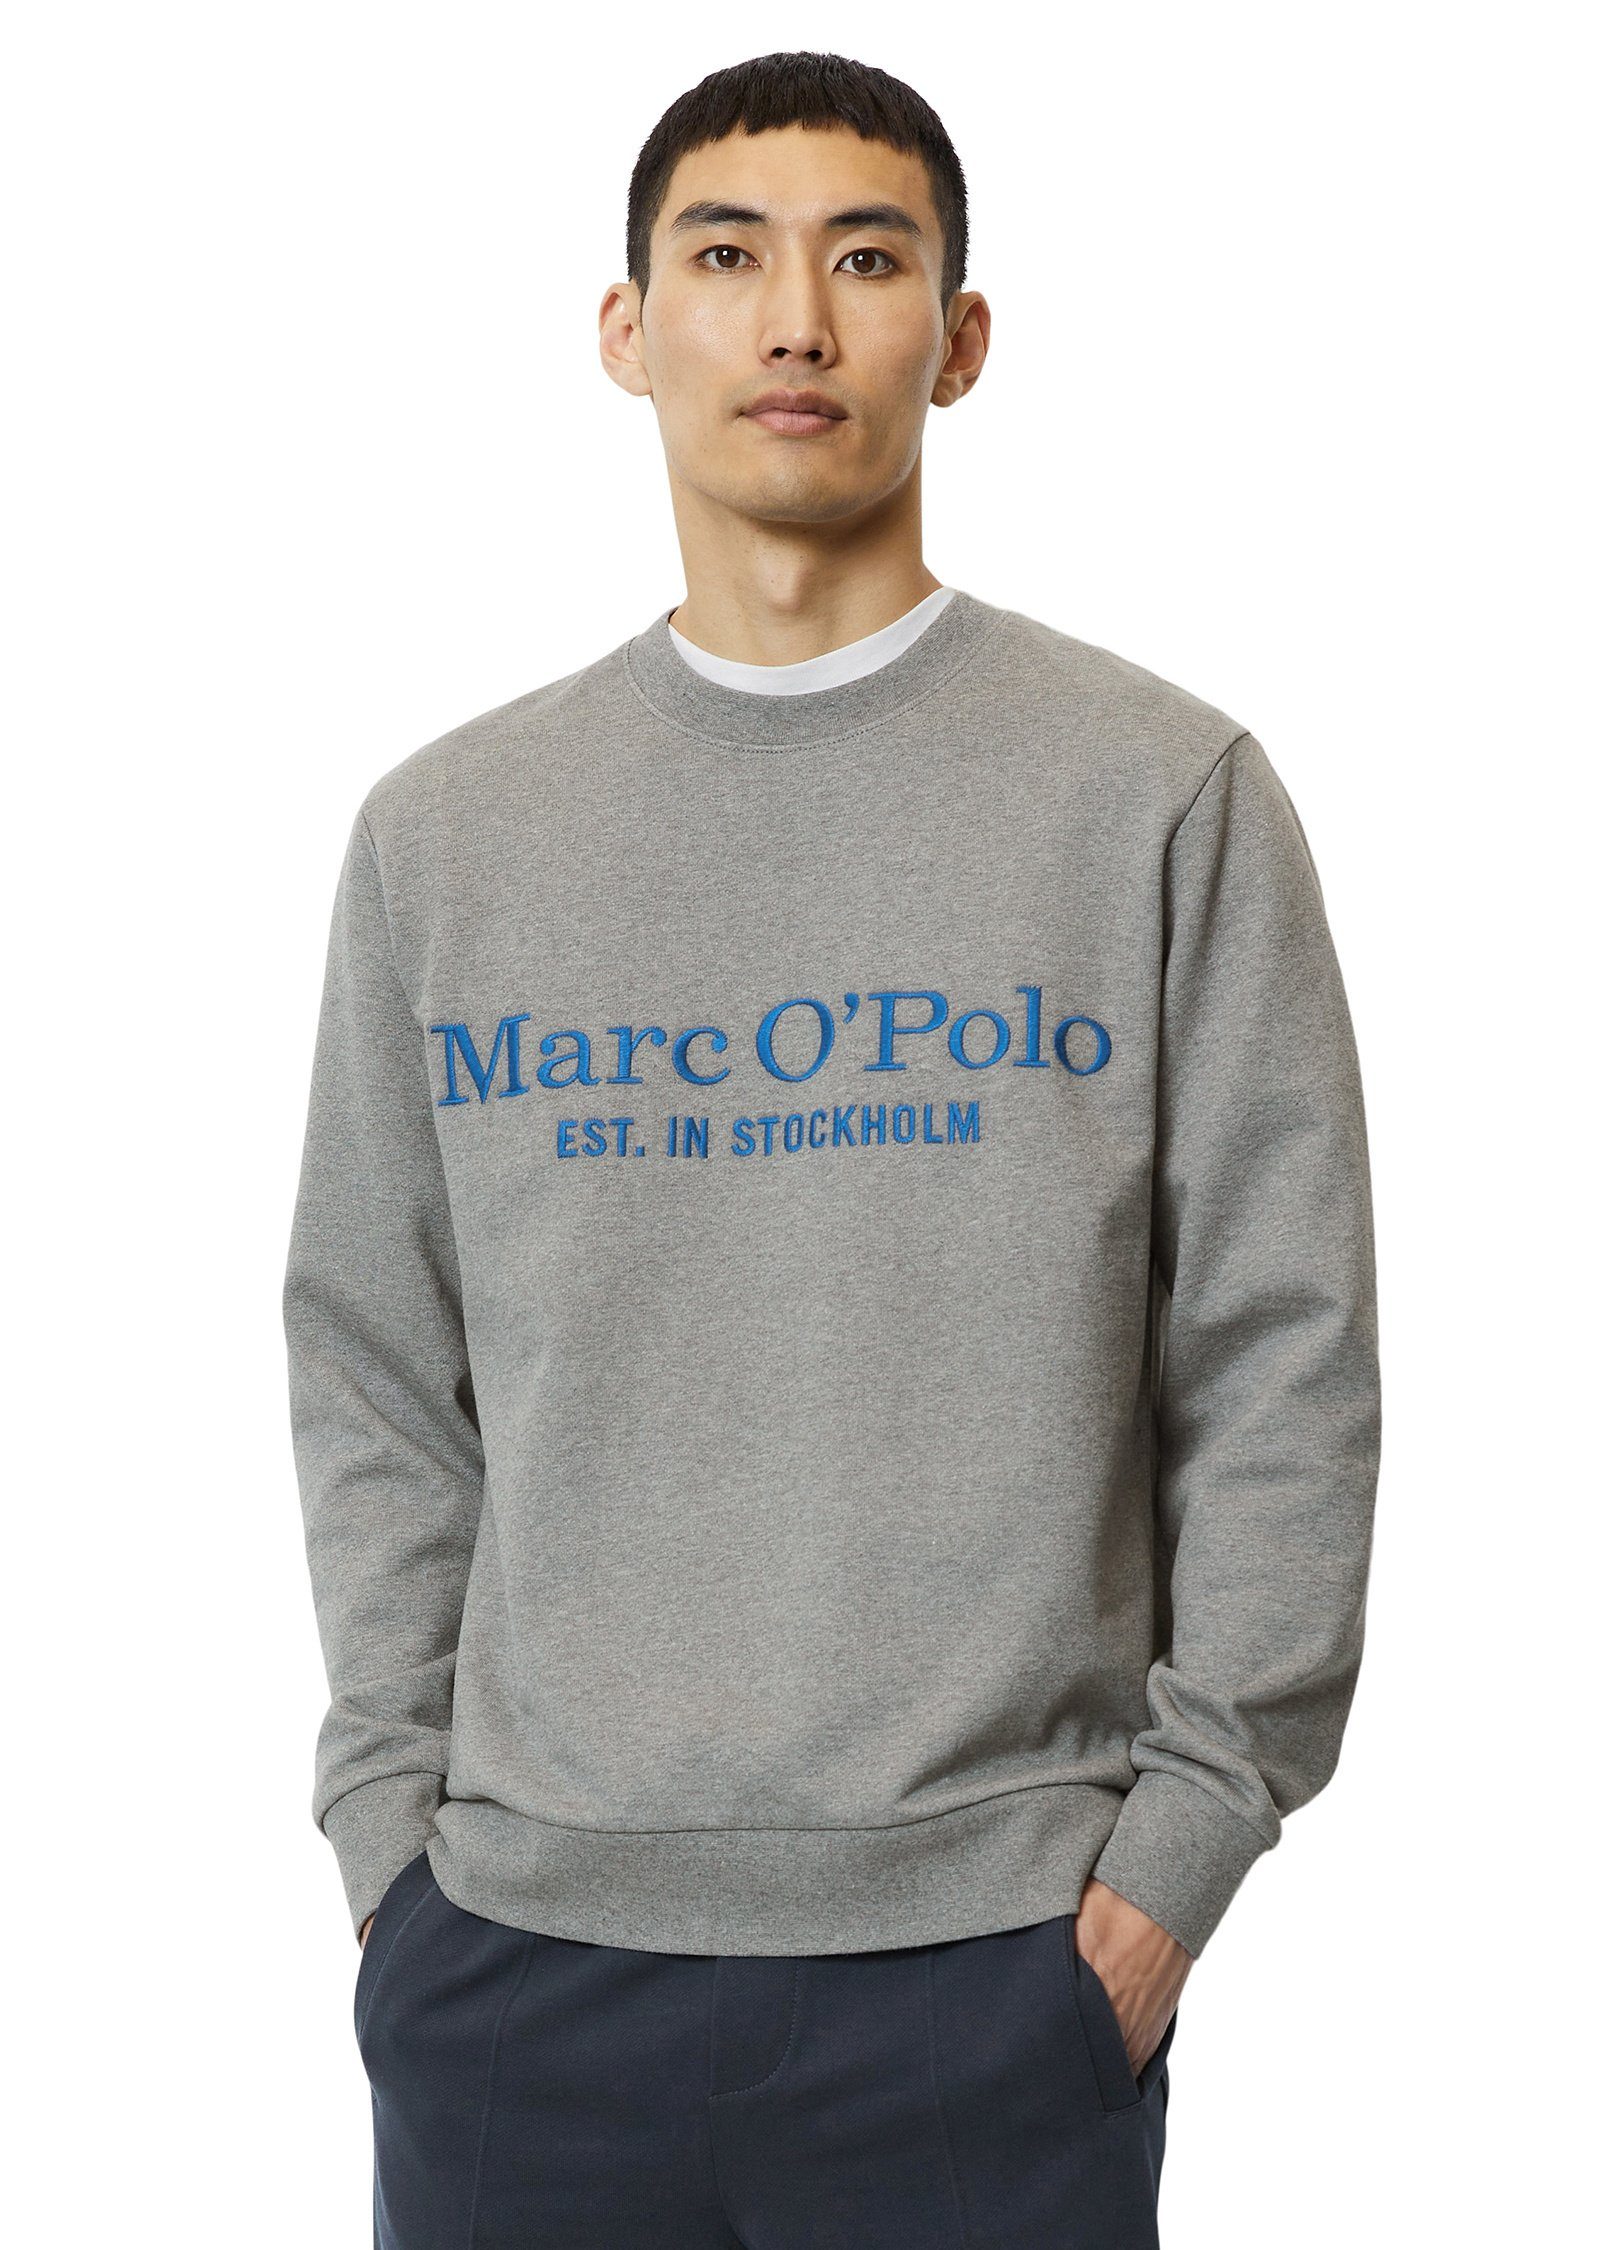 Marc O'Polo Sweatshirt aus reiner Bio-Baumwolle grau